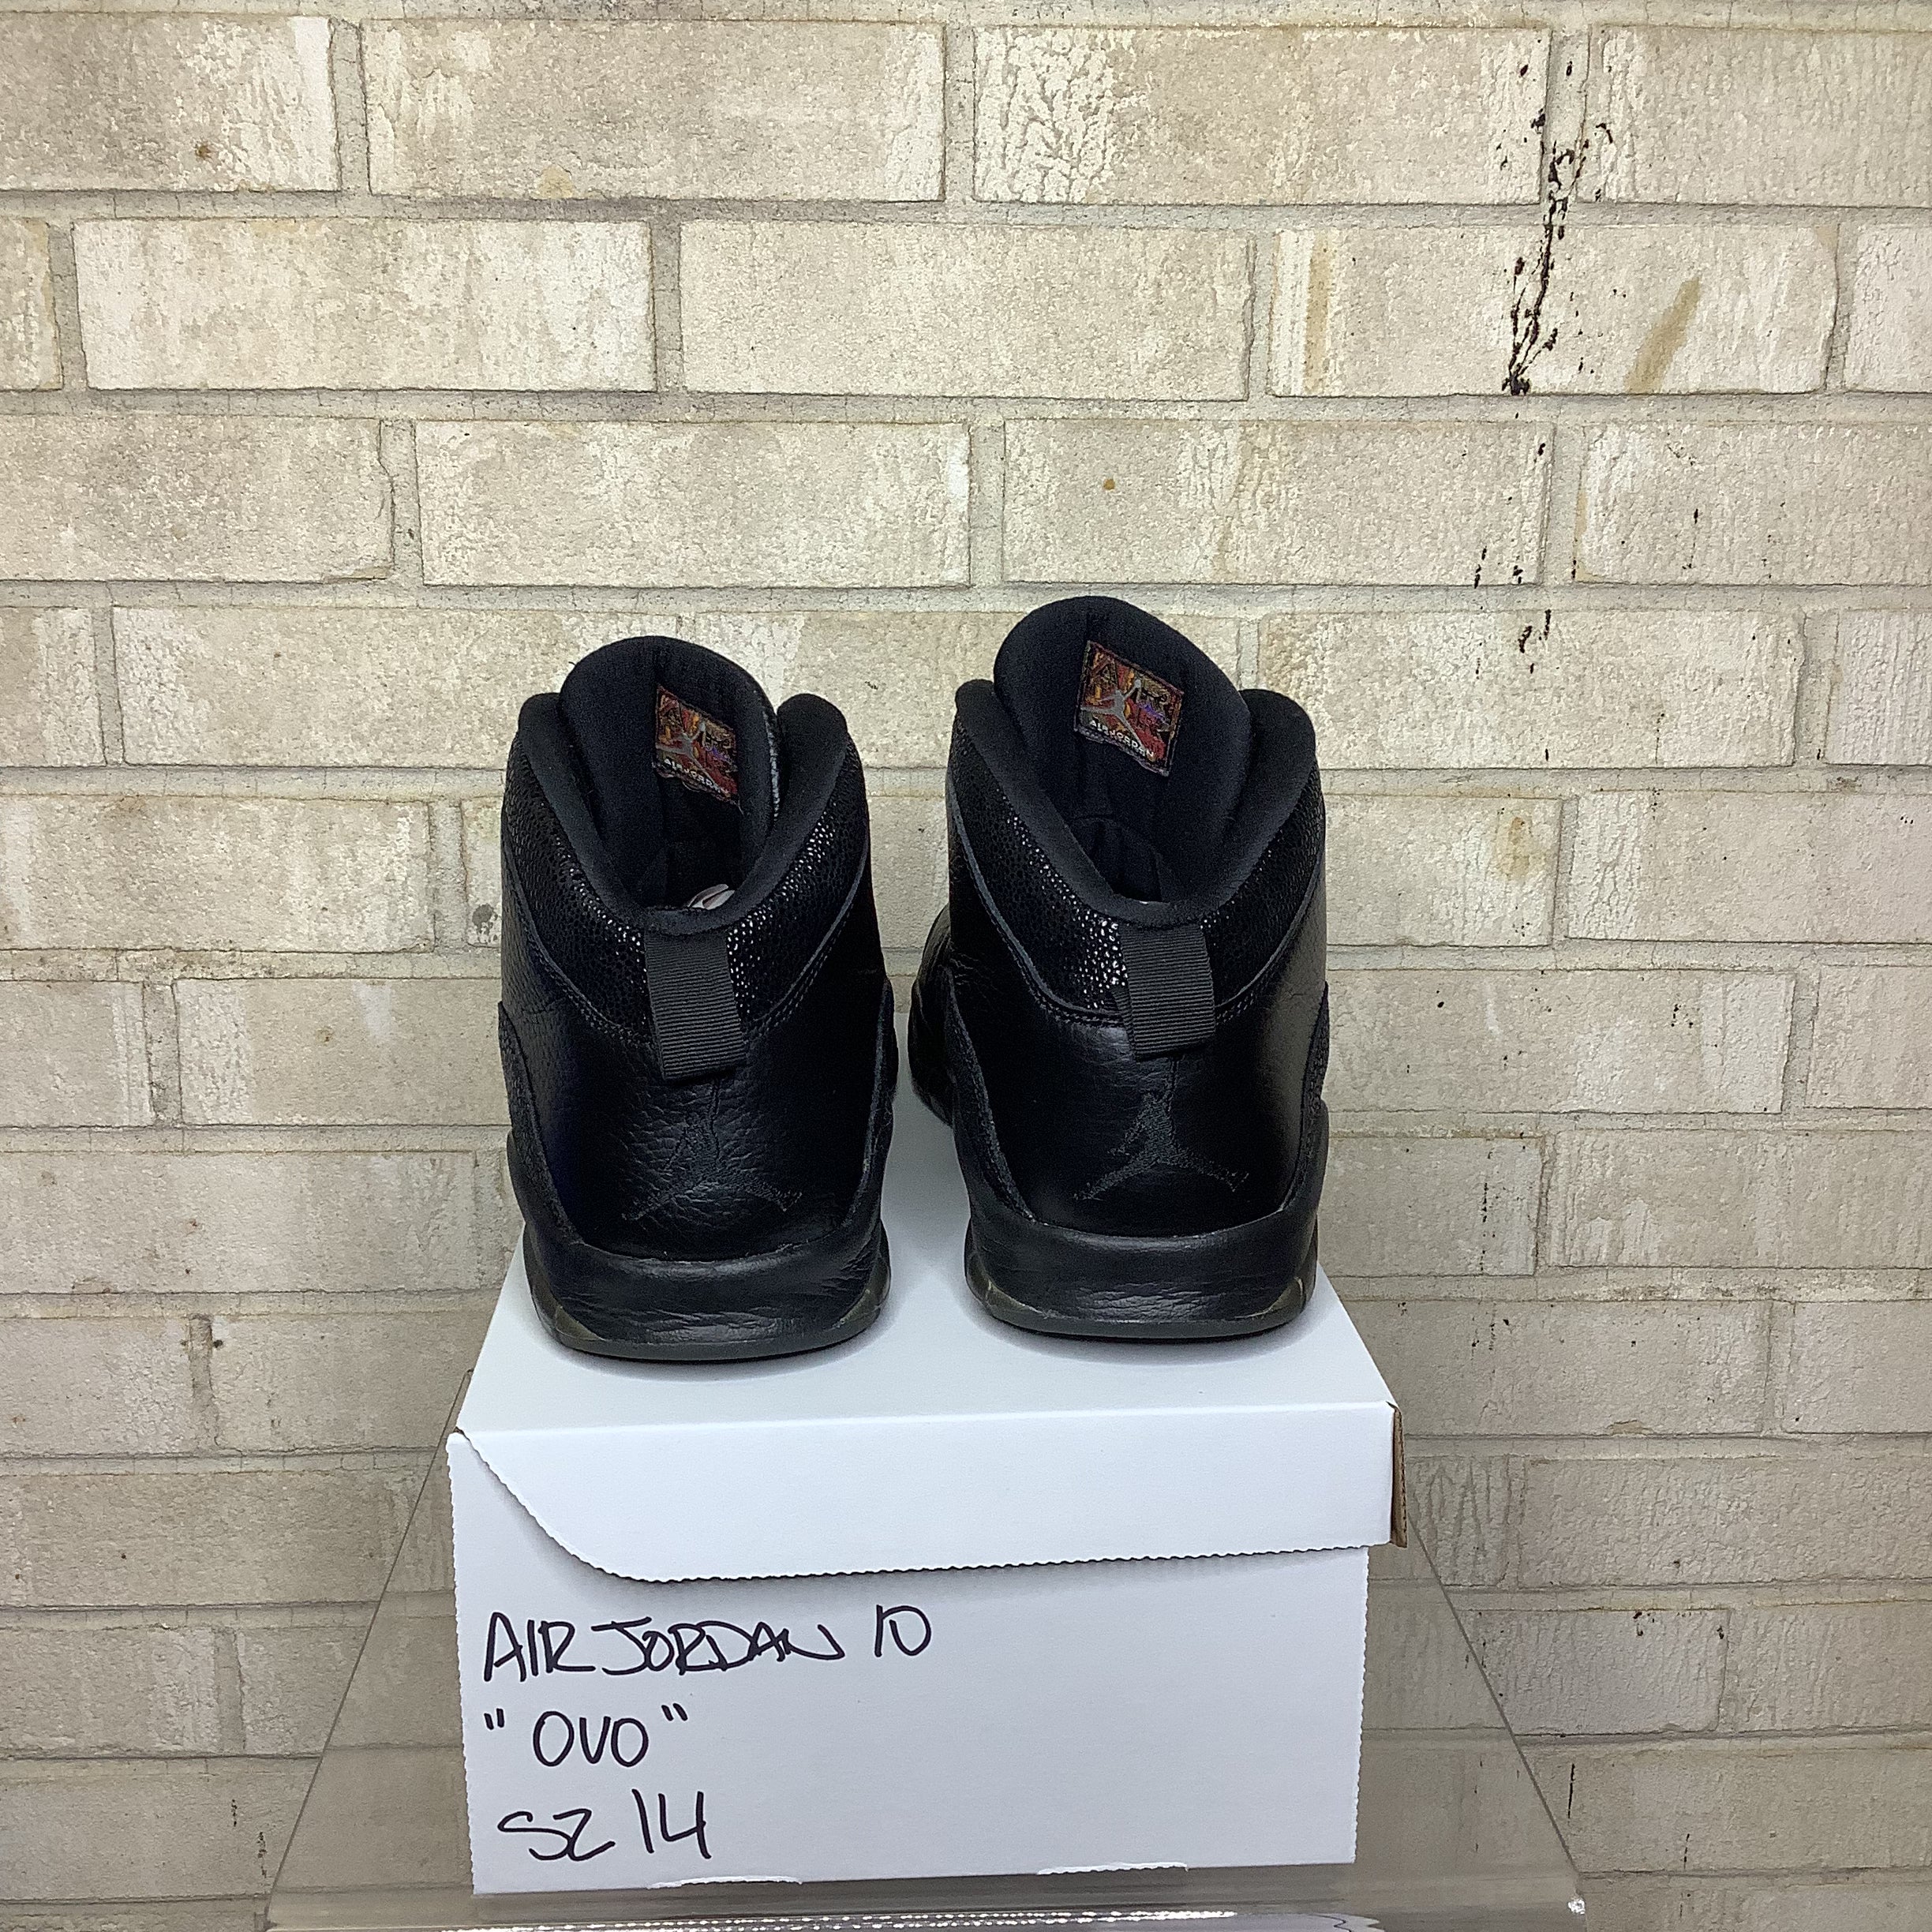 Air Jordan 10 OVO Black Size 14 819955-030